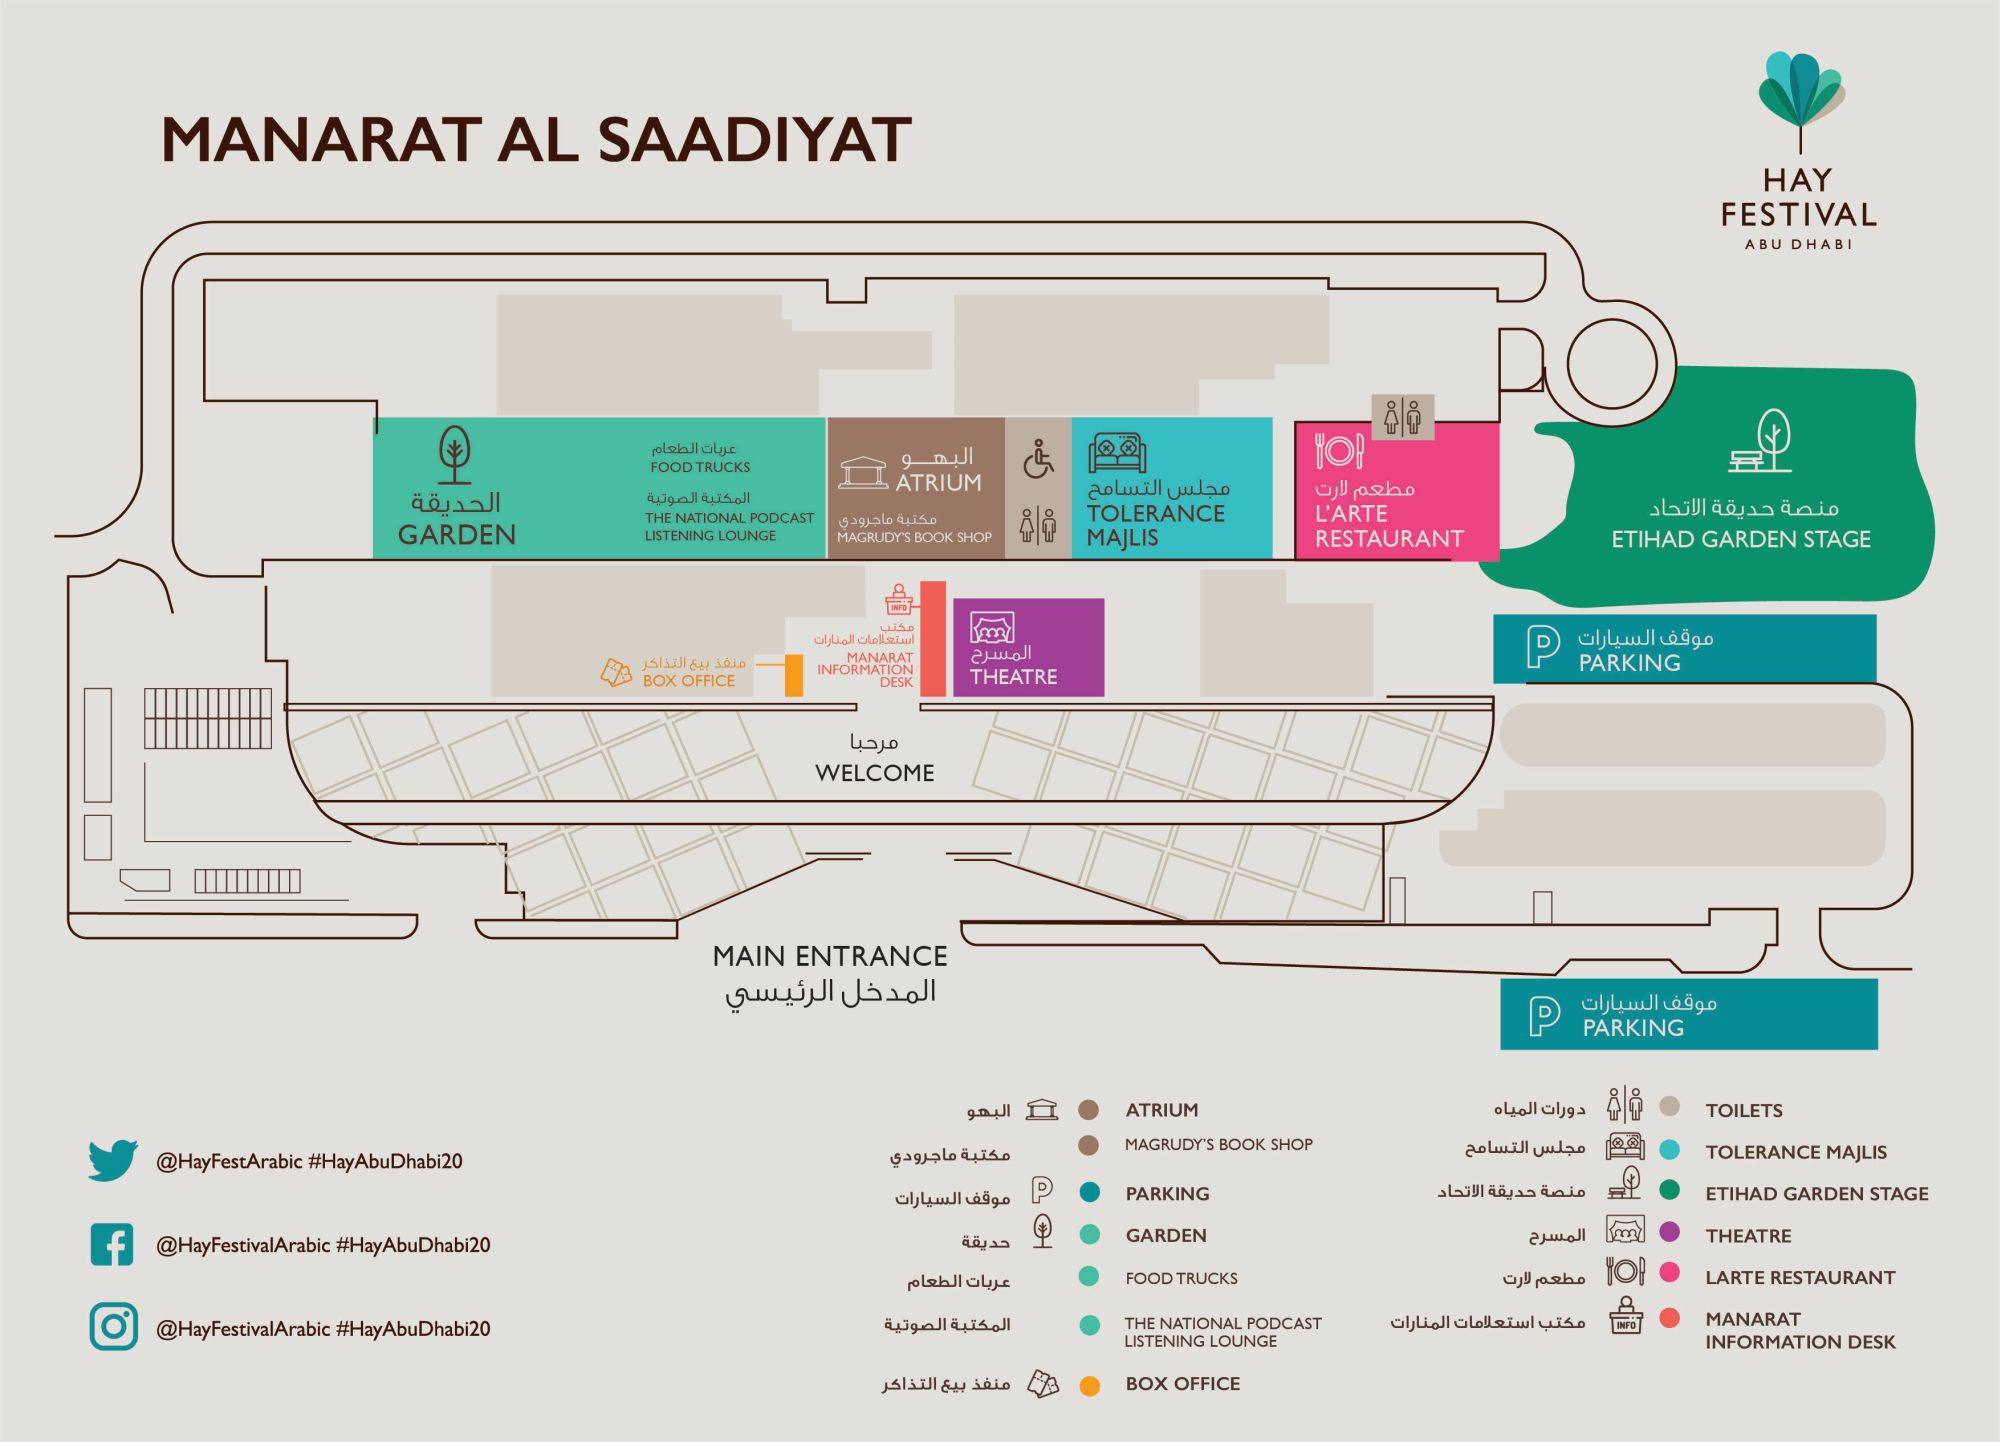 Hay Festival Abu Dhabi Manarat al Saadiyat site map